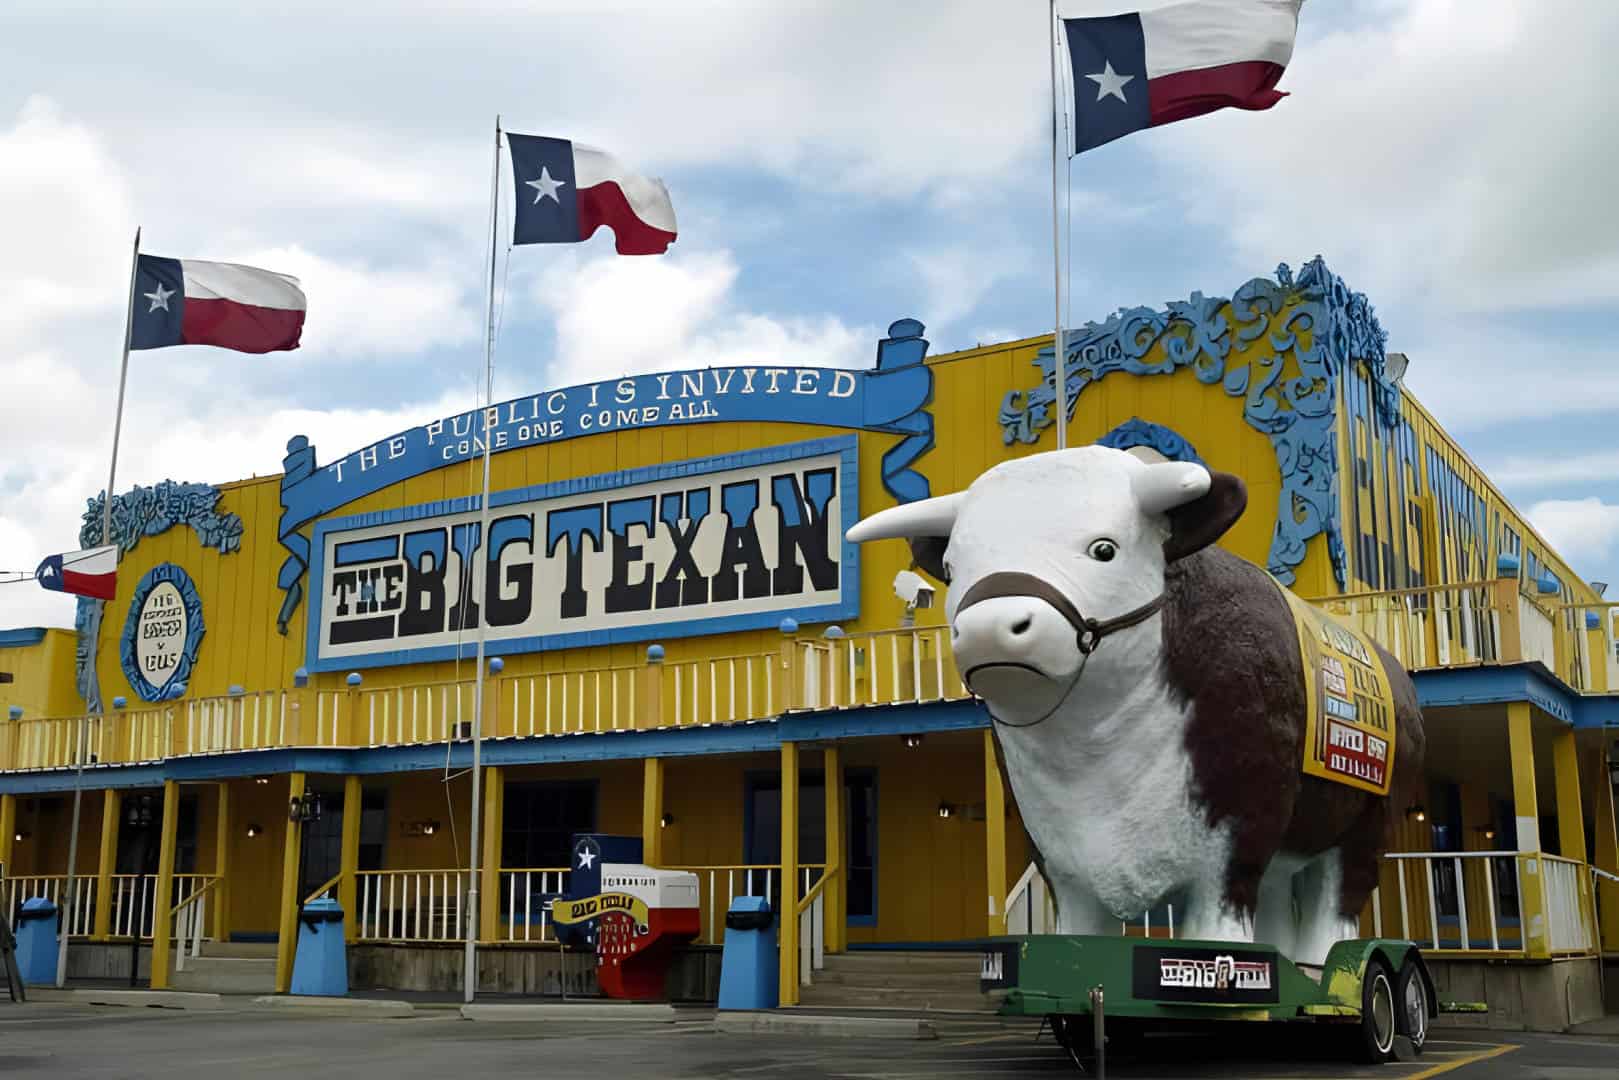 The Big Texan Steak Ranch & Brewery